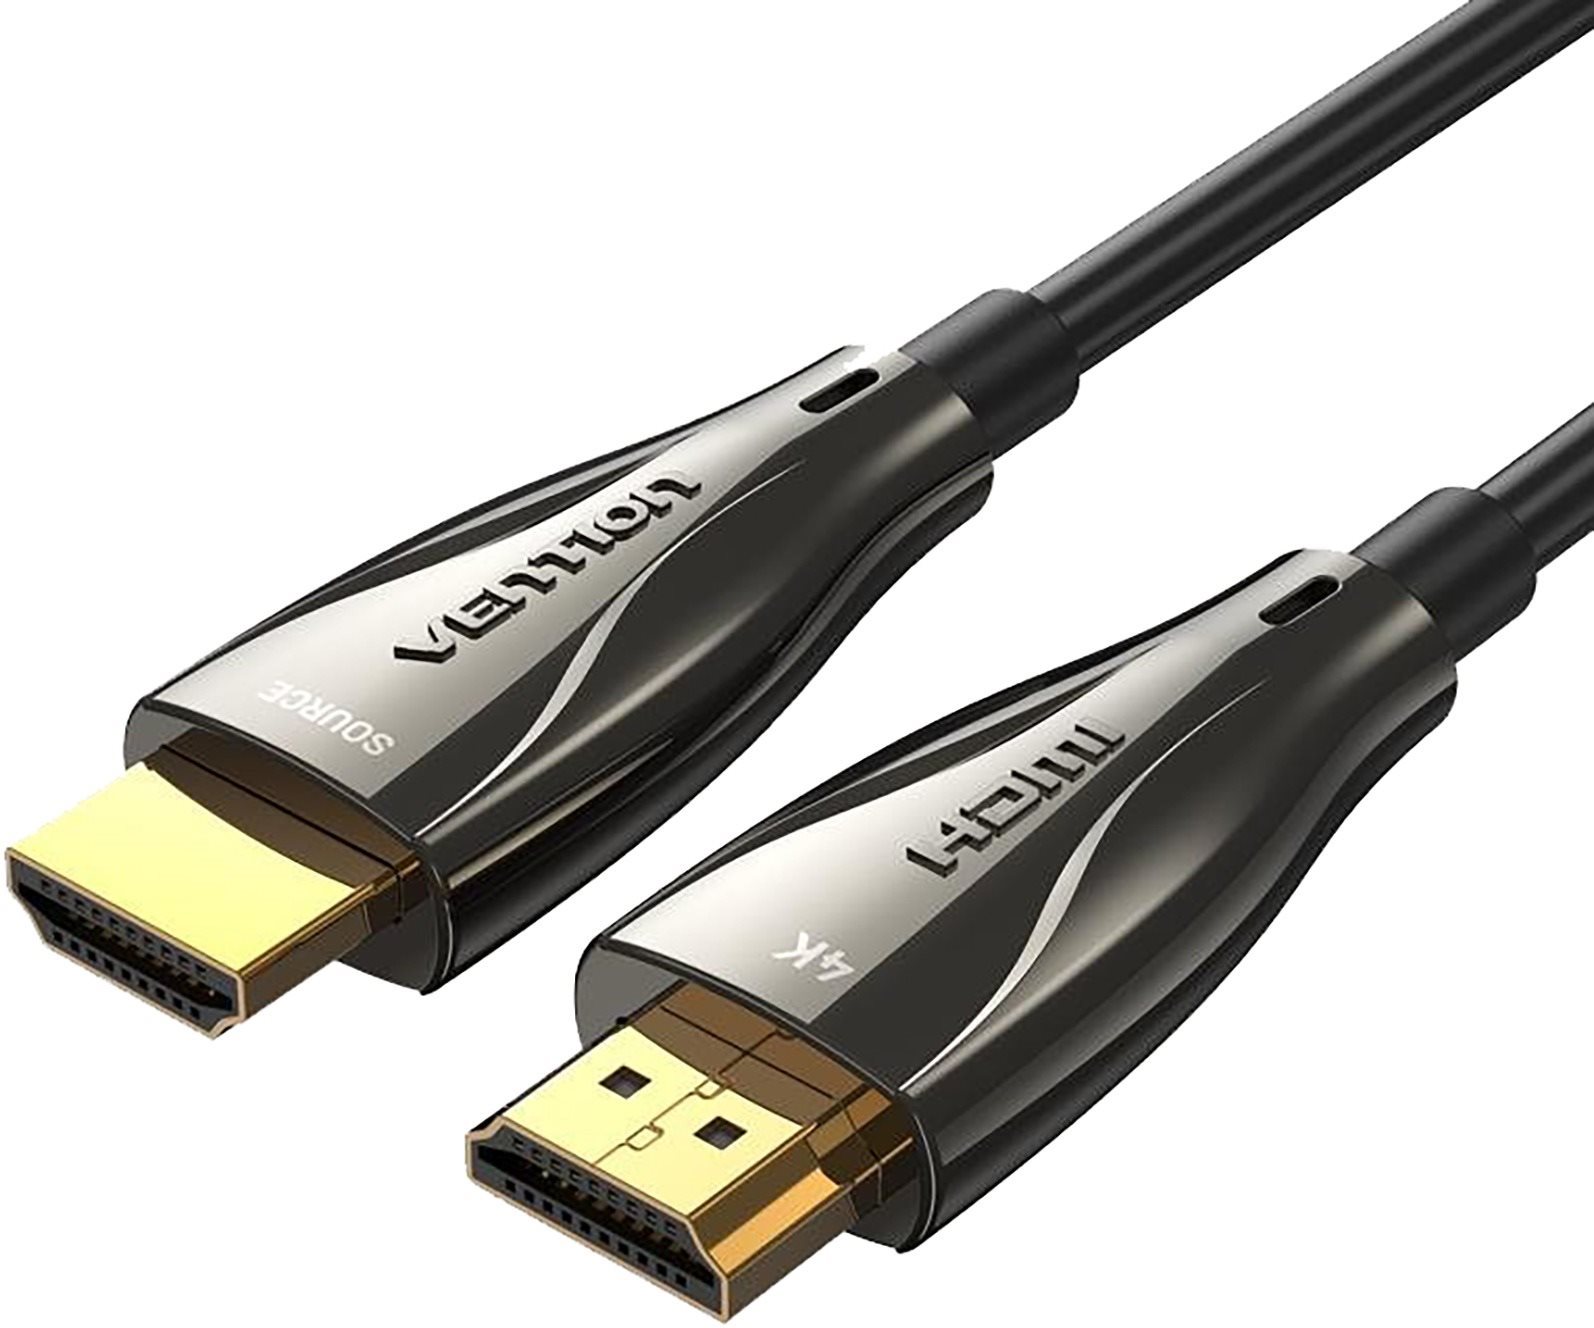 Vention Optical HDMI 2.0 Cable 1.5M Black Zinc Alloy Type